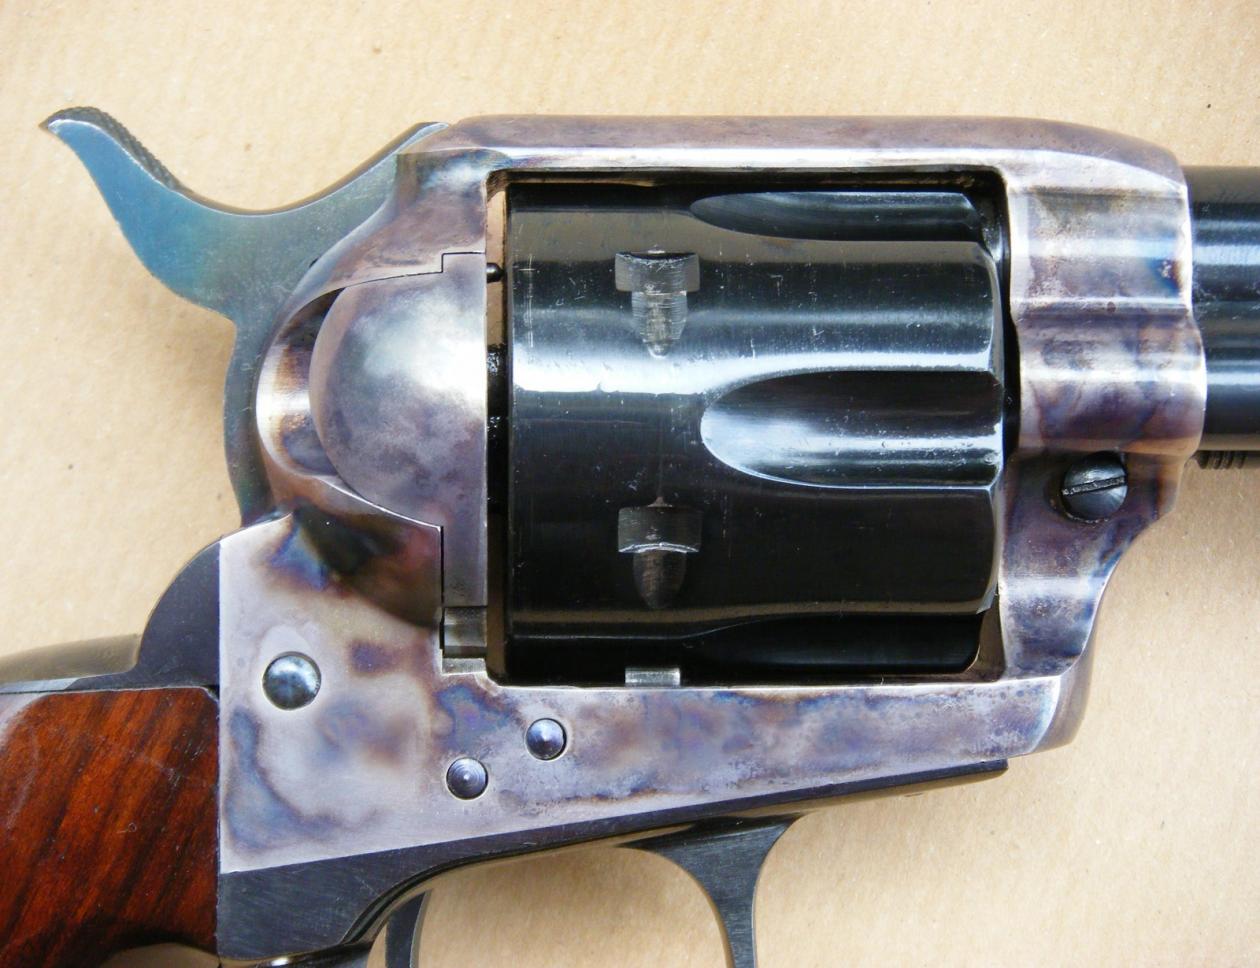 colt 45 single action revolver